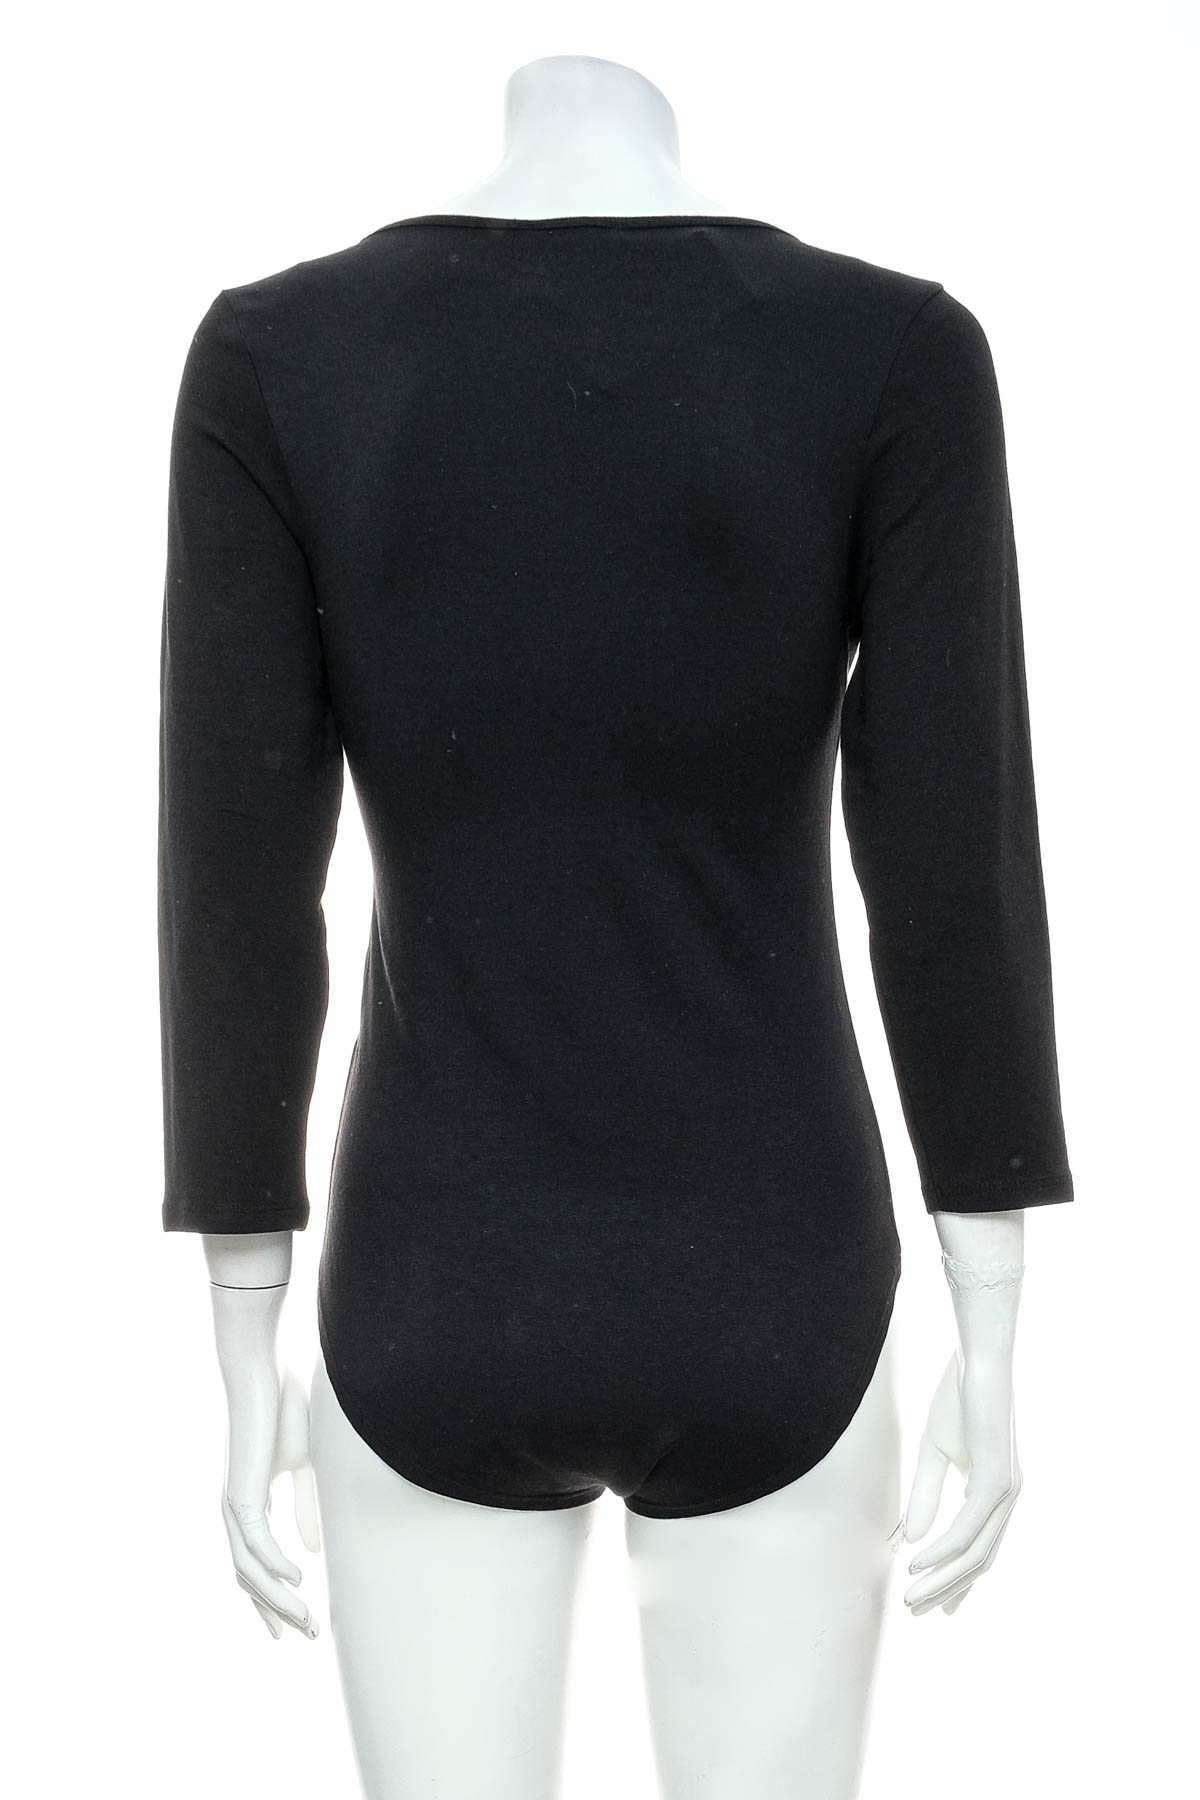 Woman's bodysuit - AMISU - 1